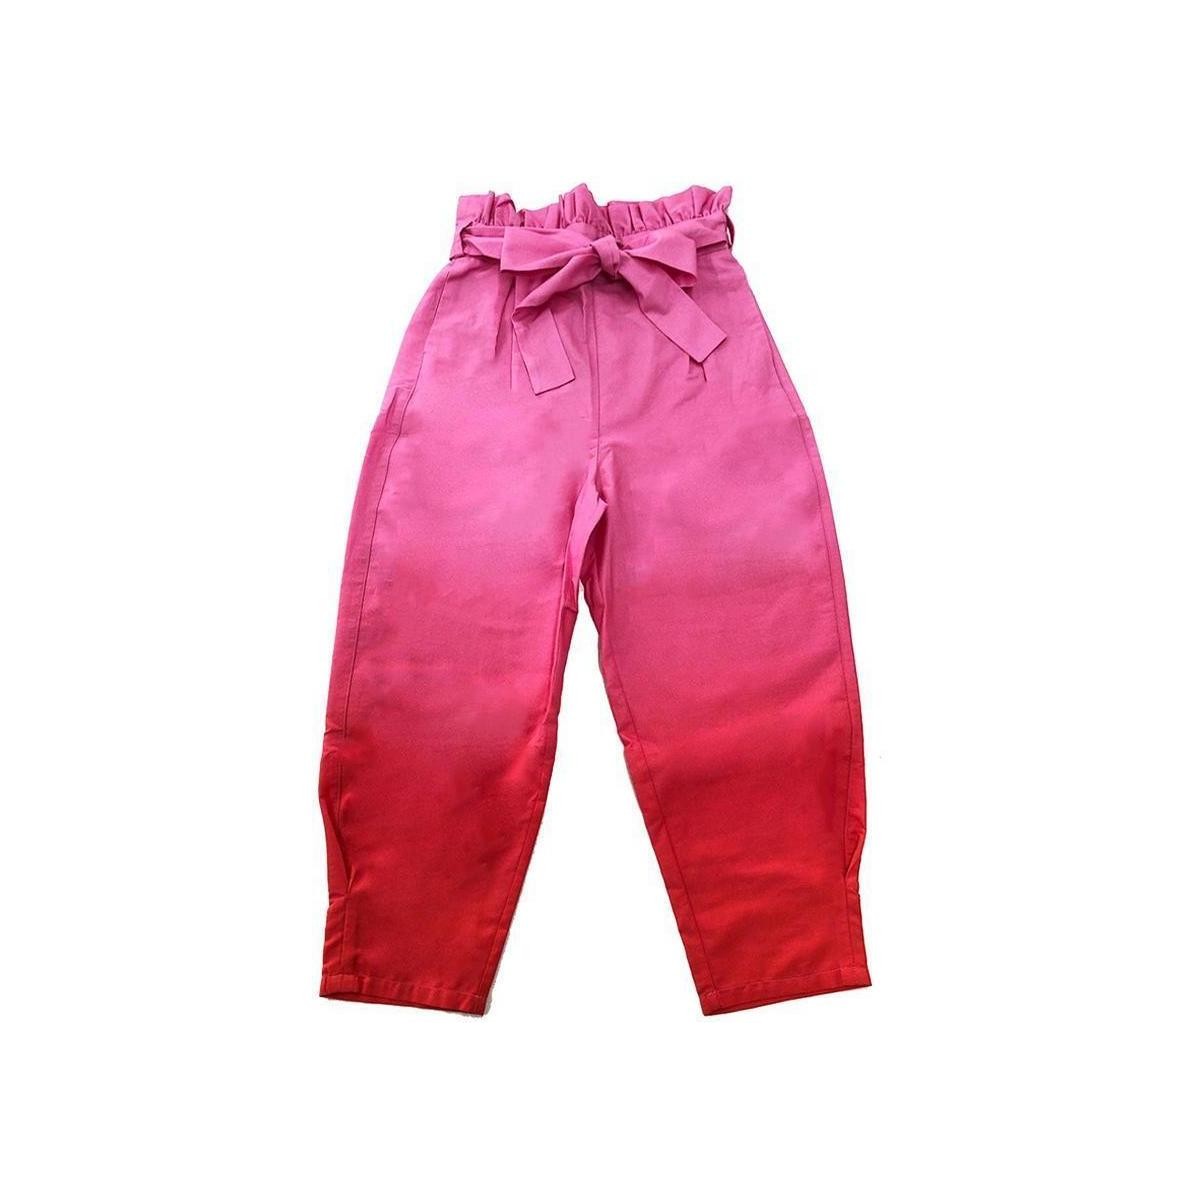 Abbigliamento Bambina Pantaloni Patrizia Pepe PANTALONE. Rosa